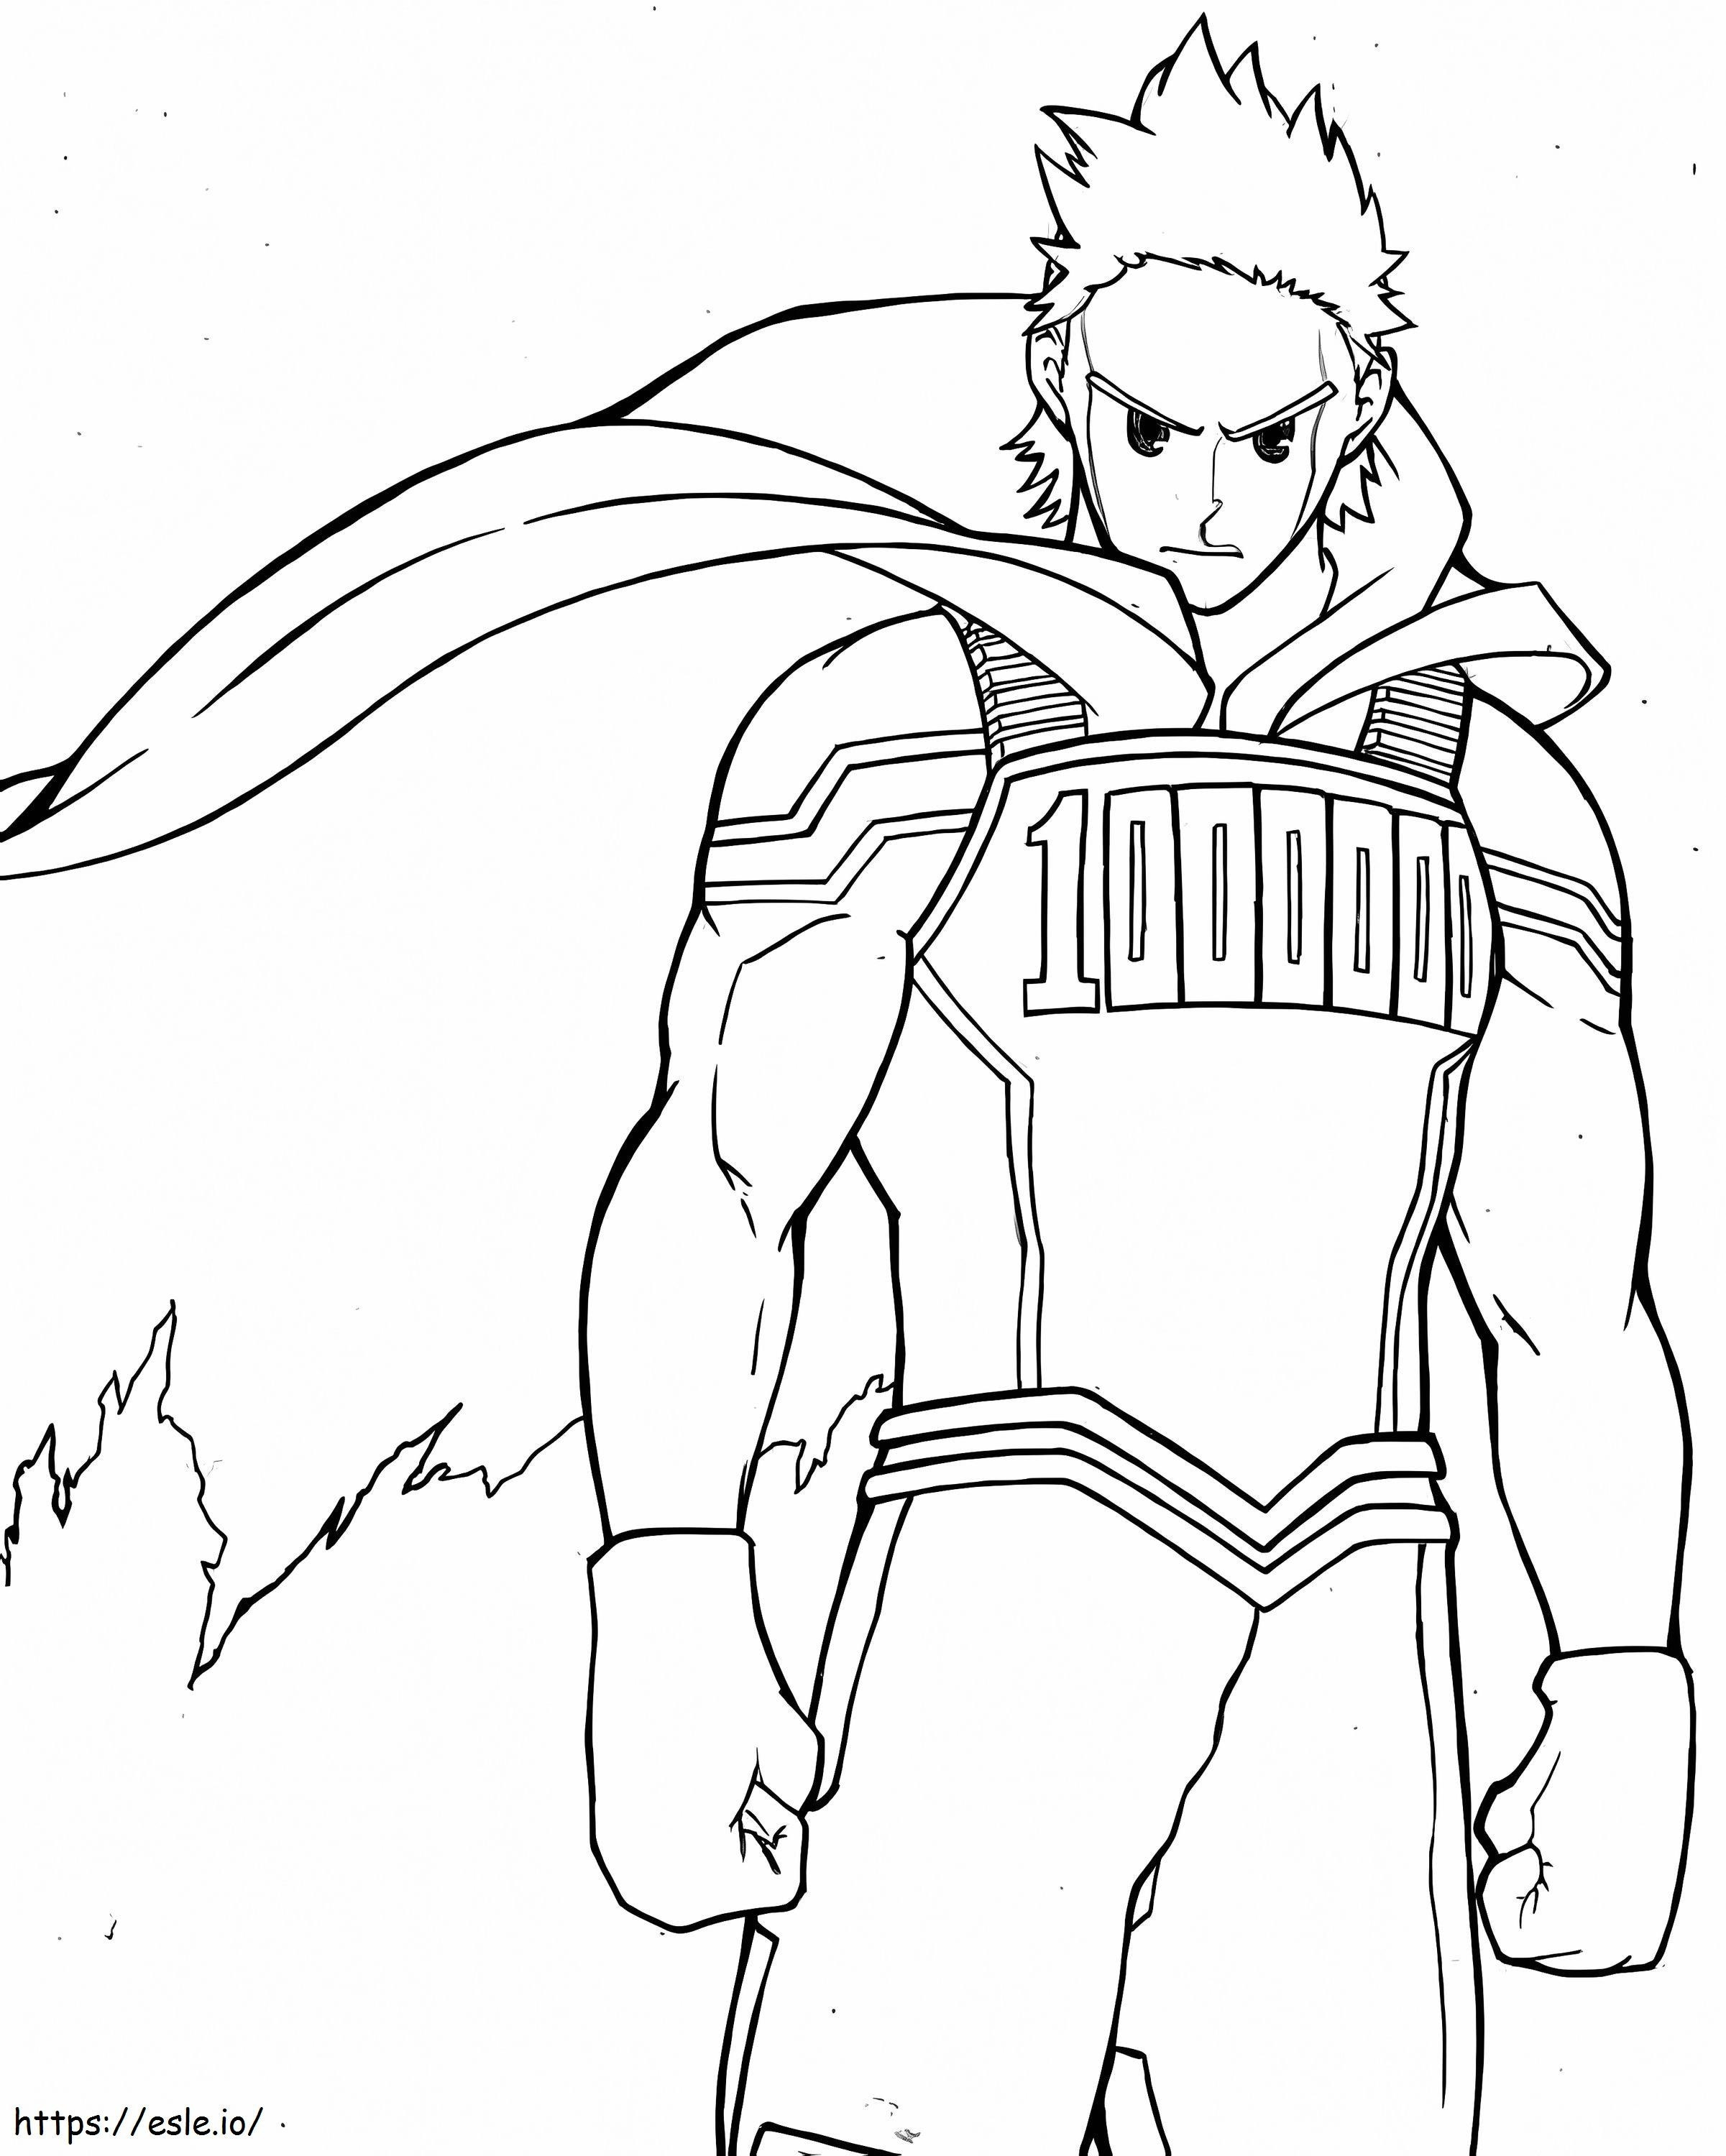 My Hero Academia Mirio Togata coloring page